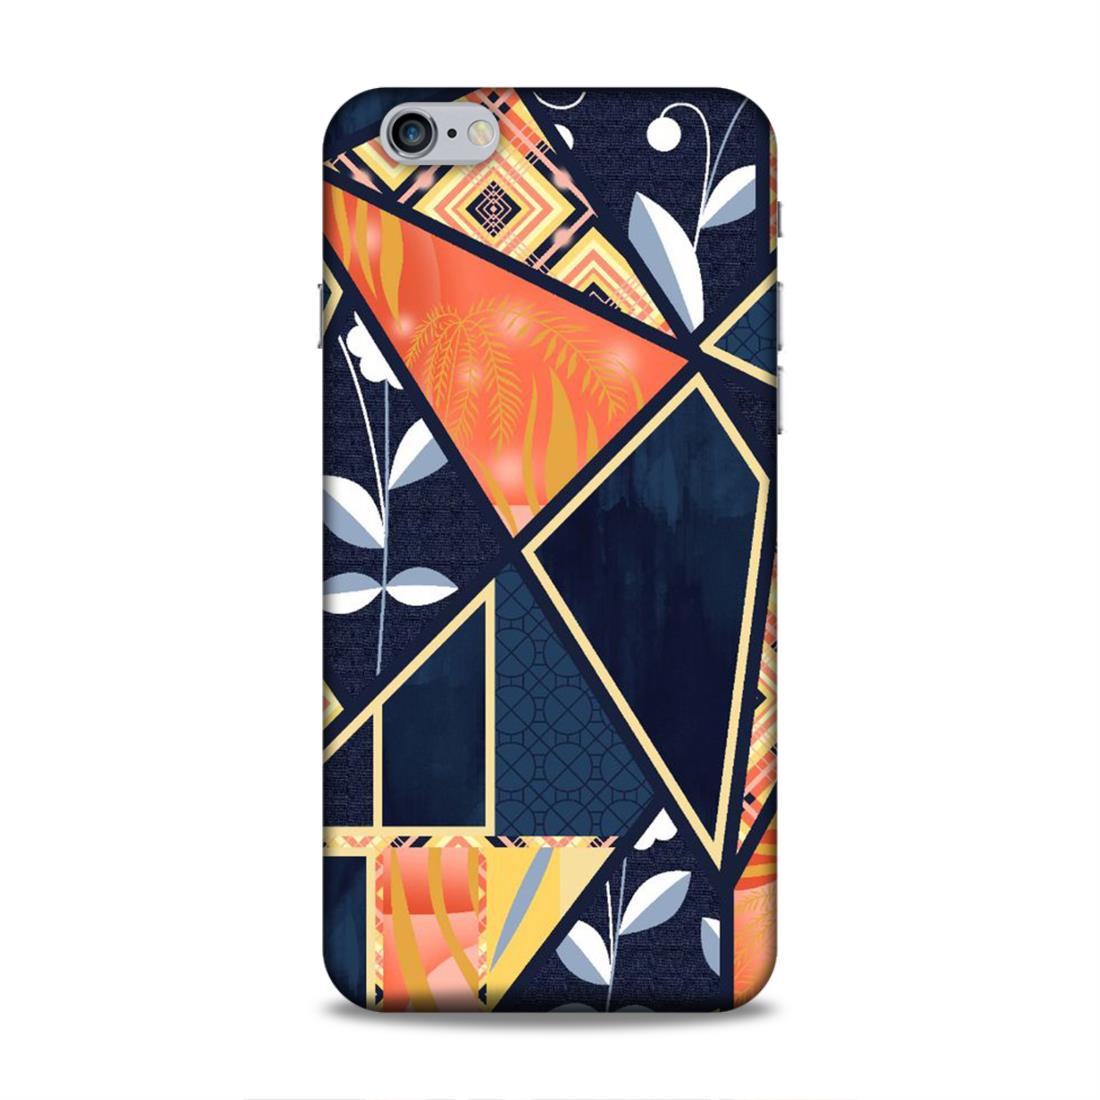 Floral Textile Pattern Hard Back Case For Apple iPhone 6 Plus / 6s Plus